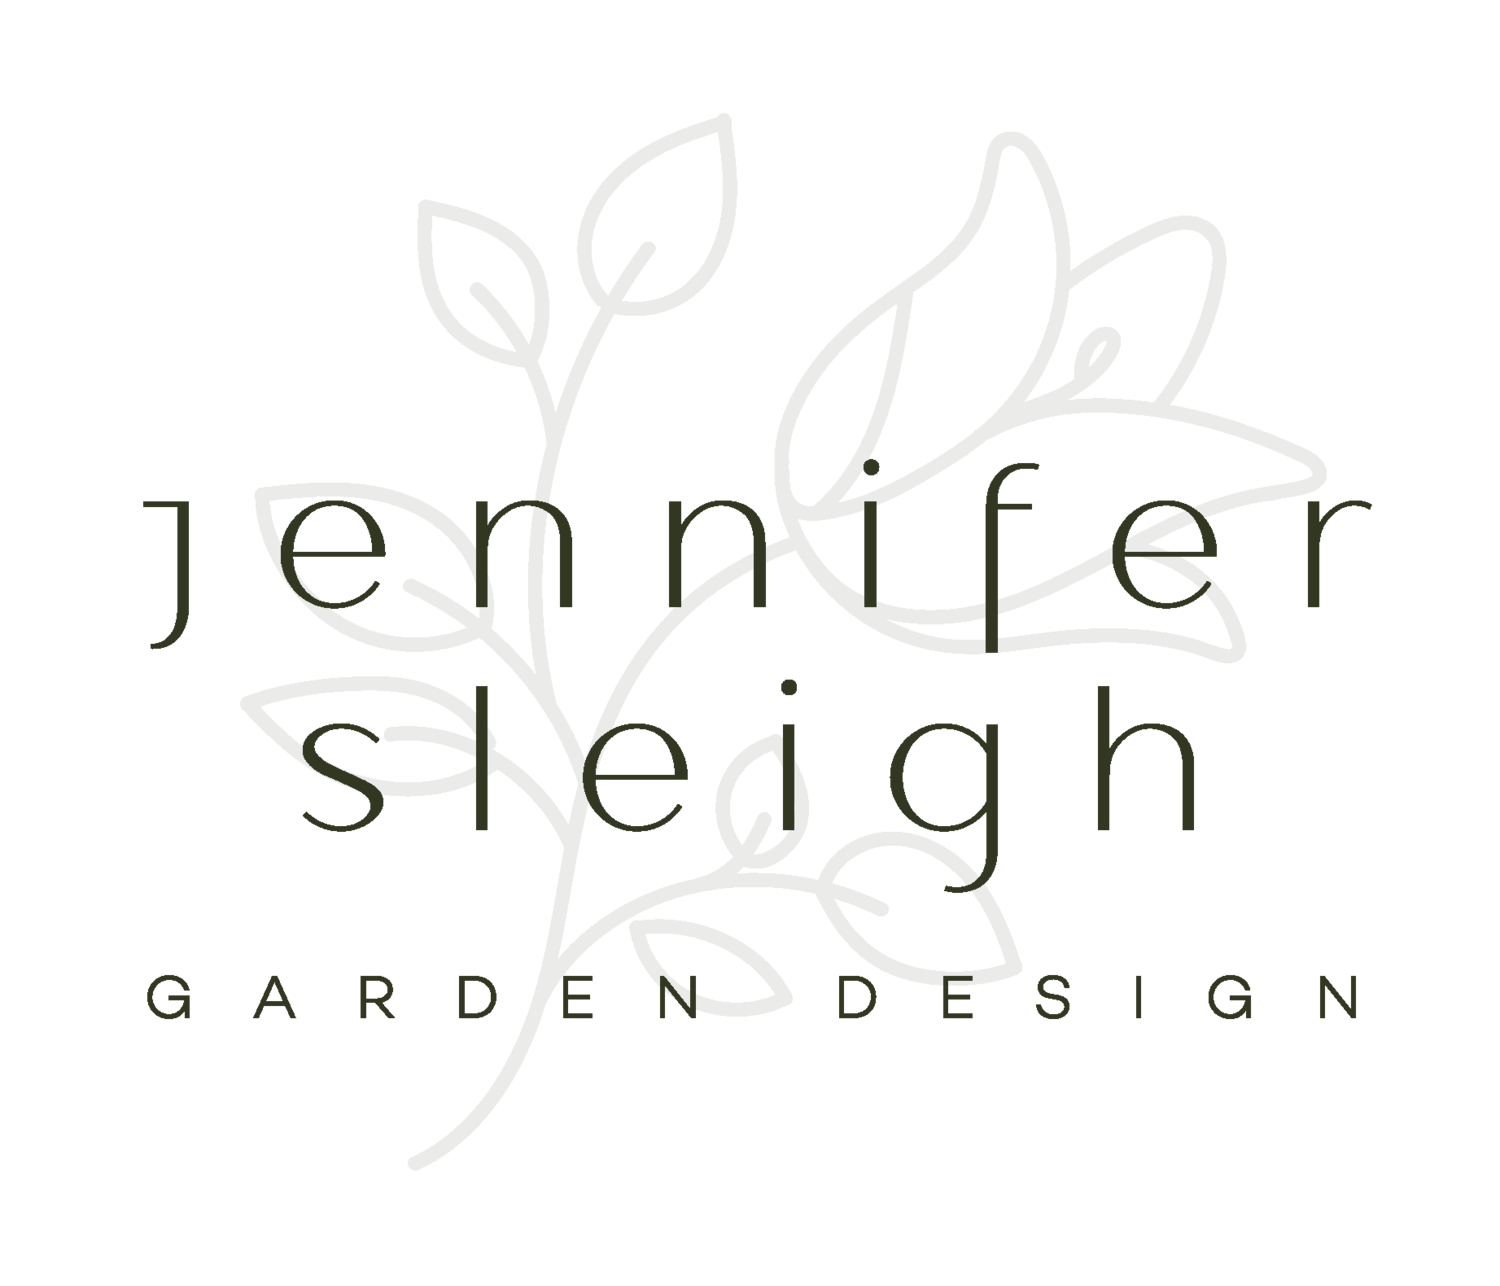 Jennifer Sleigh Garden Design